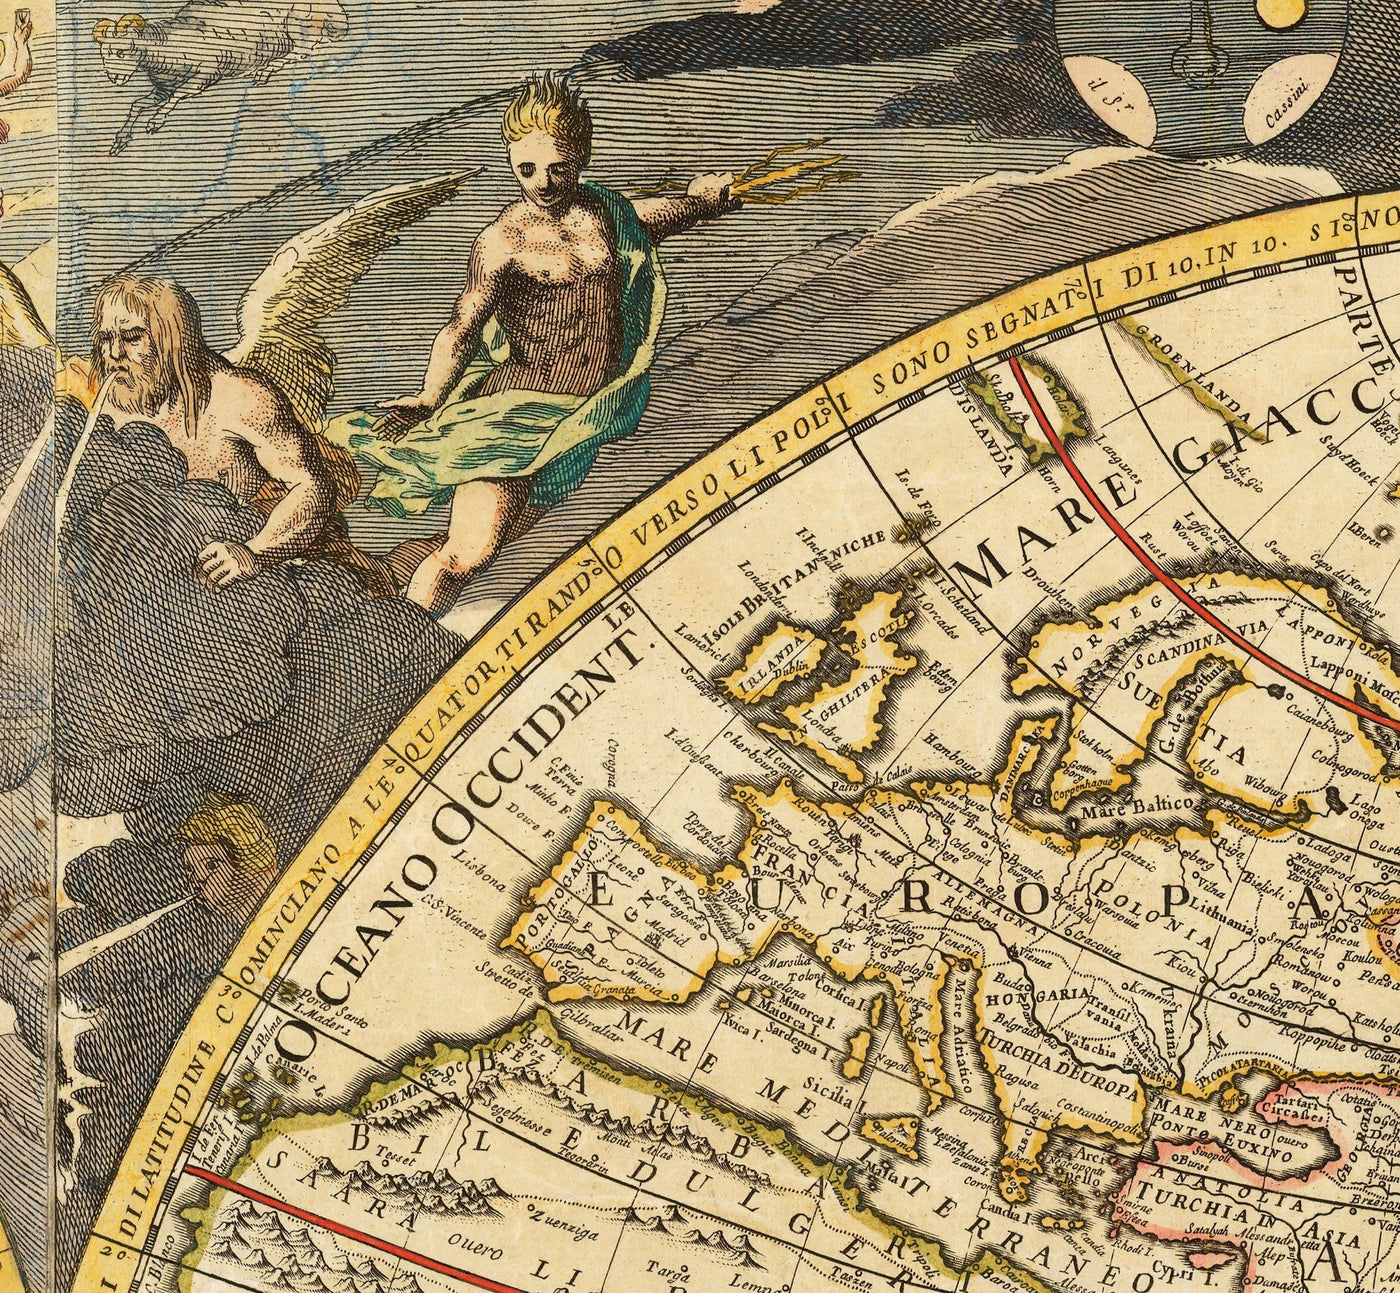 Old World Atlas Karte, 1700 von Paolo Petrini - Seltene antike handgefärterte Karte